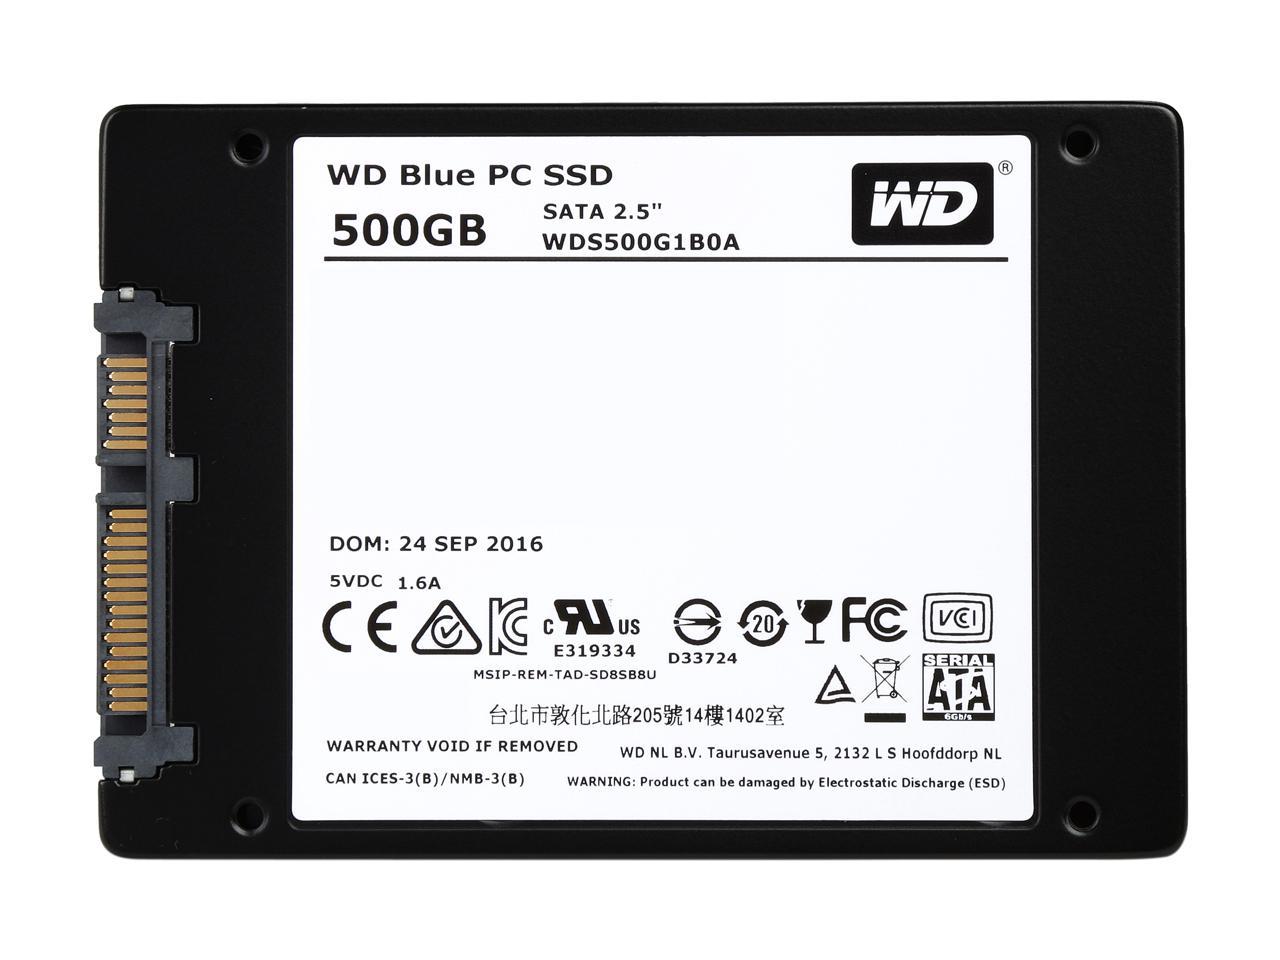 8WD Blue 500 GB Internal SSD WDBNCE5000PNC-WRSN Brand New sealed 